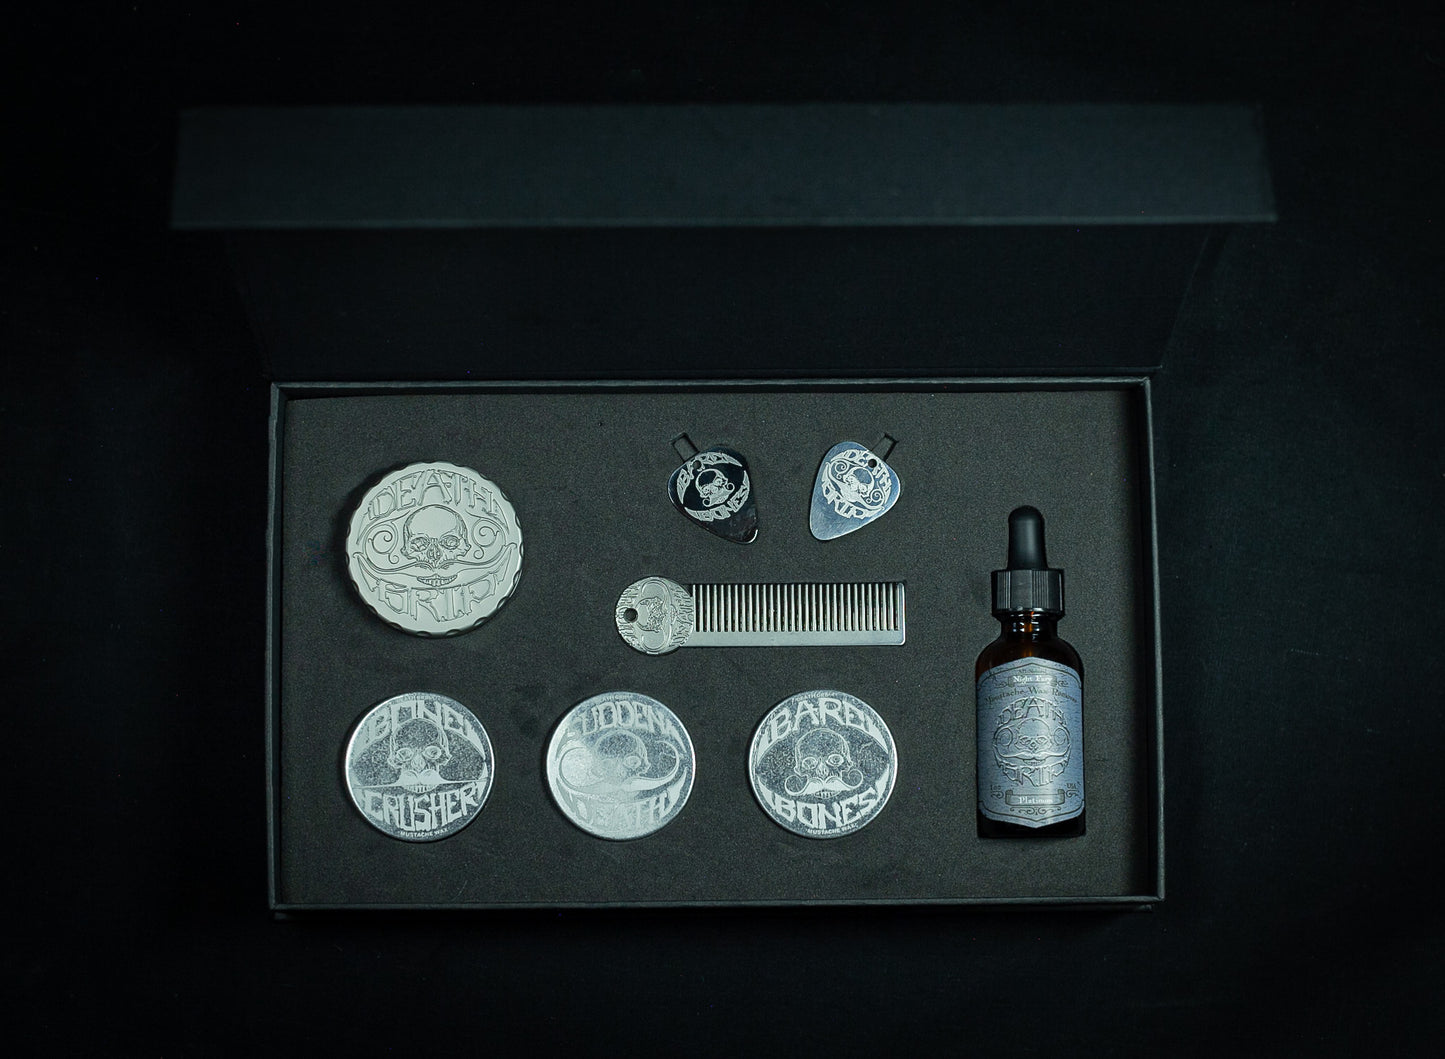 Death Grip Platinum EDC Mustache Wax Kit | Refillable Wax Inserts